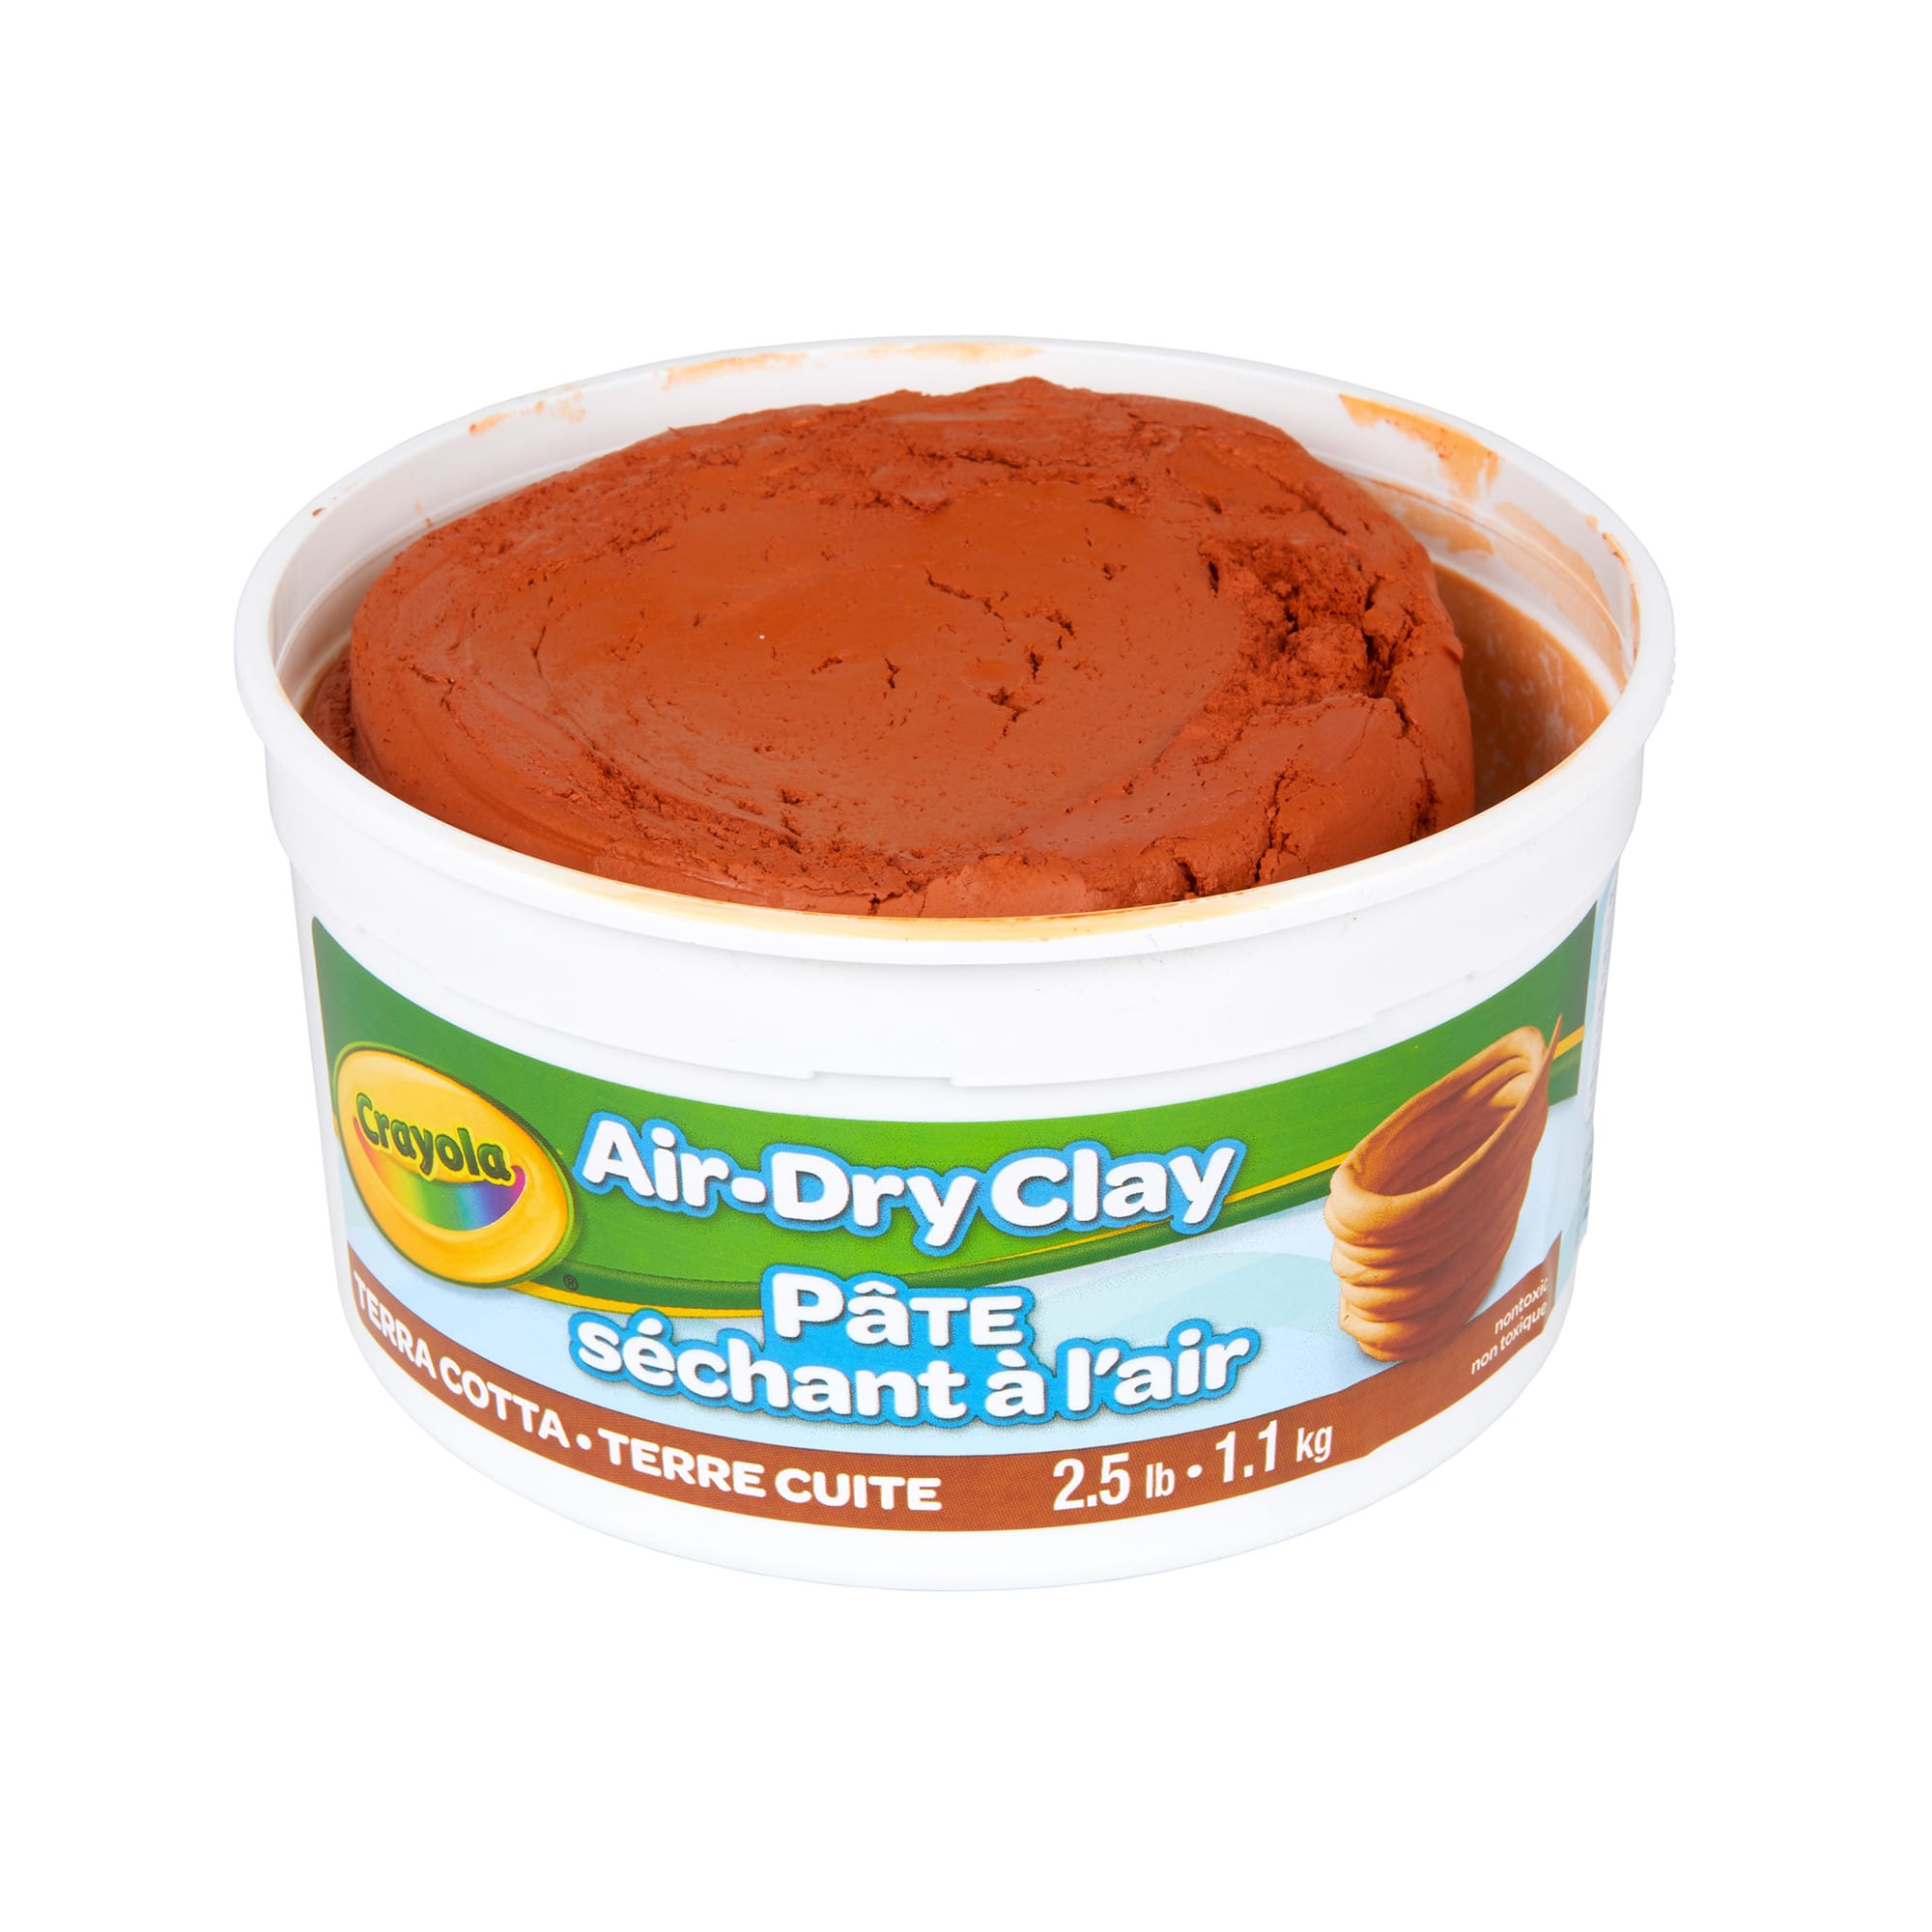 Crayola Air-Dry Terra Cotta Clay, 2.5lb. | Michaels